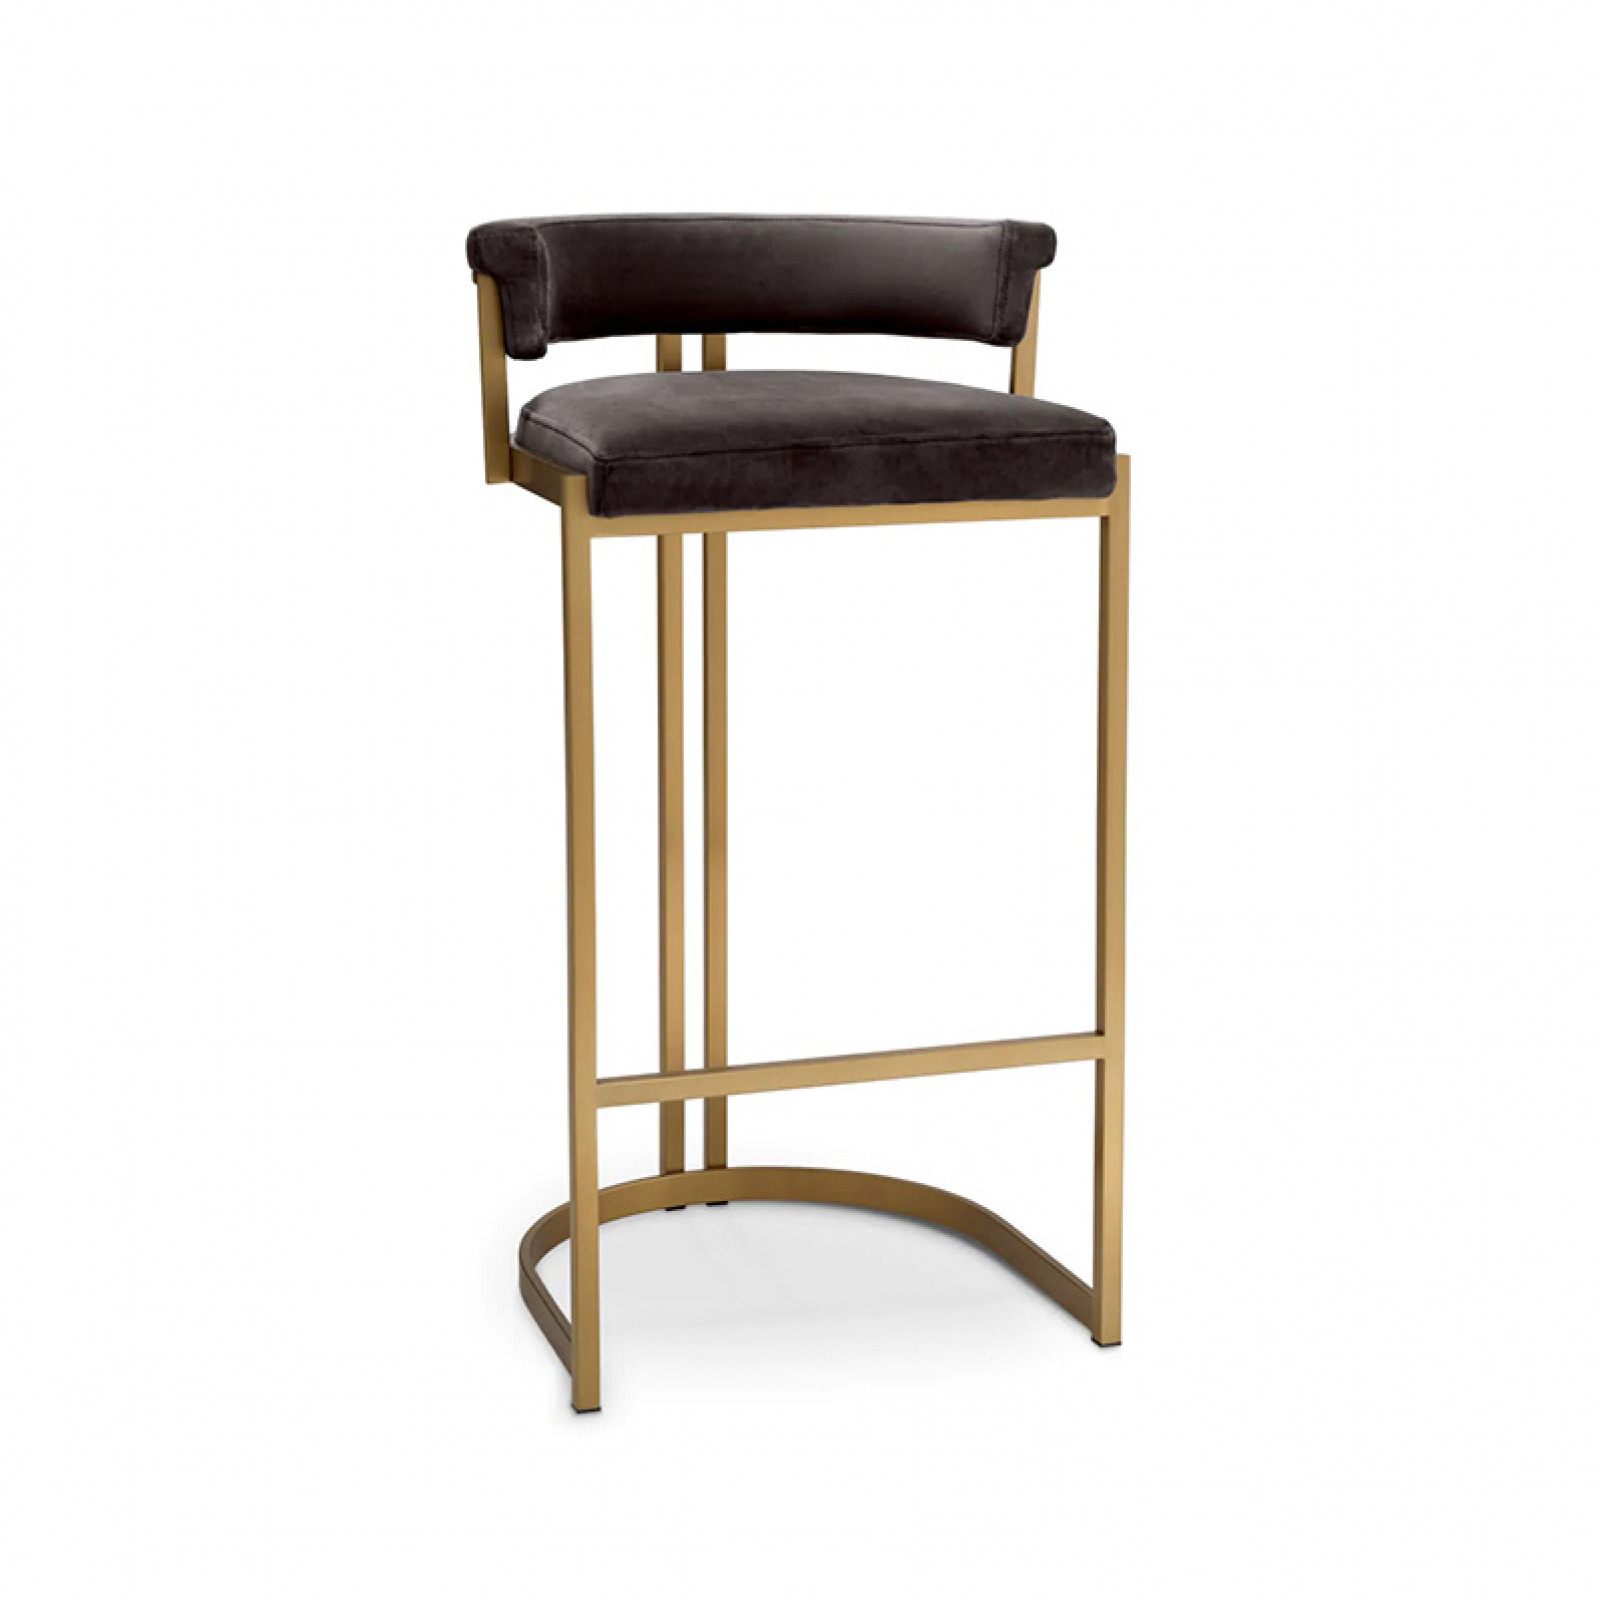 Dante bronze bar stool high